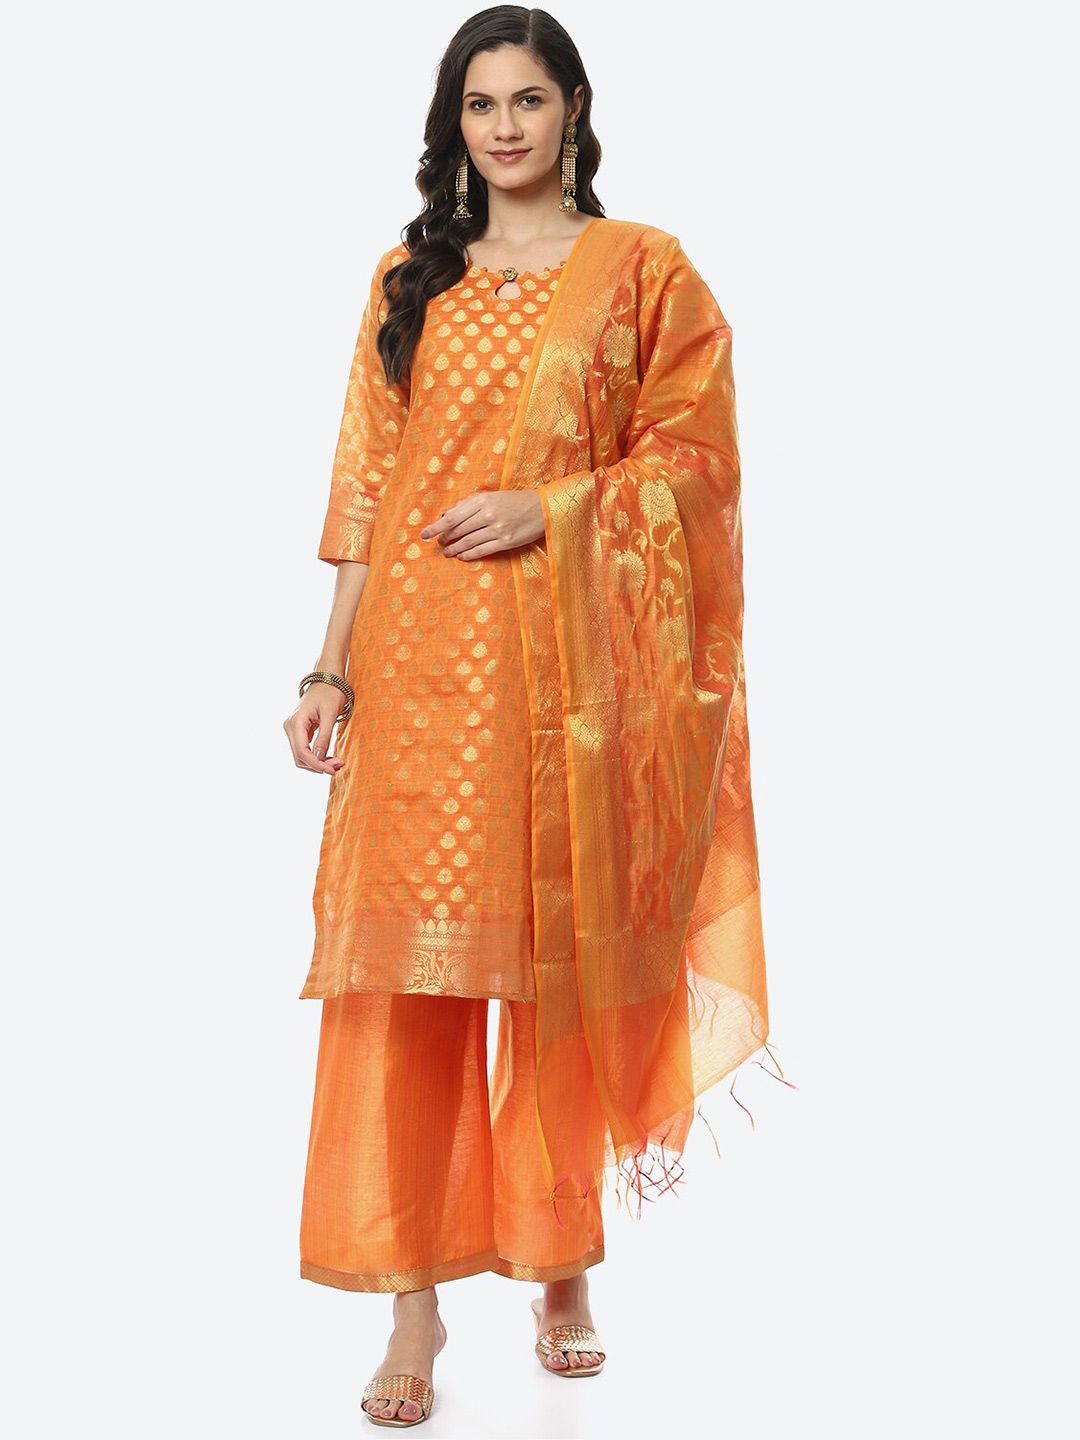 Biba Orange & Gold-Toned Unstitched Dress Material Price in India